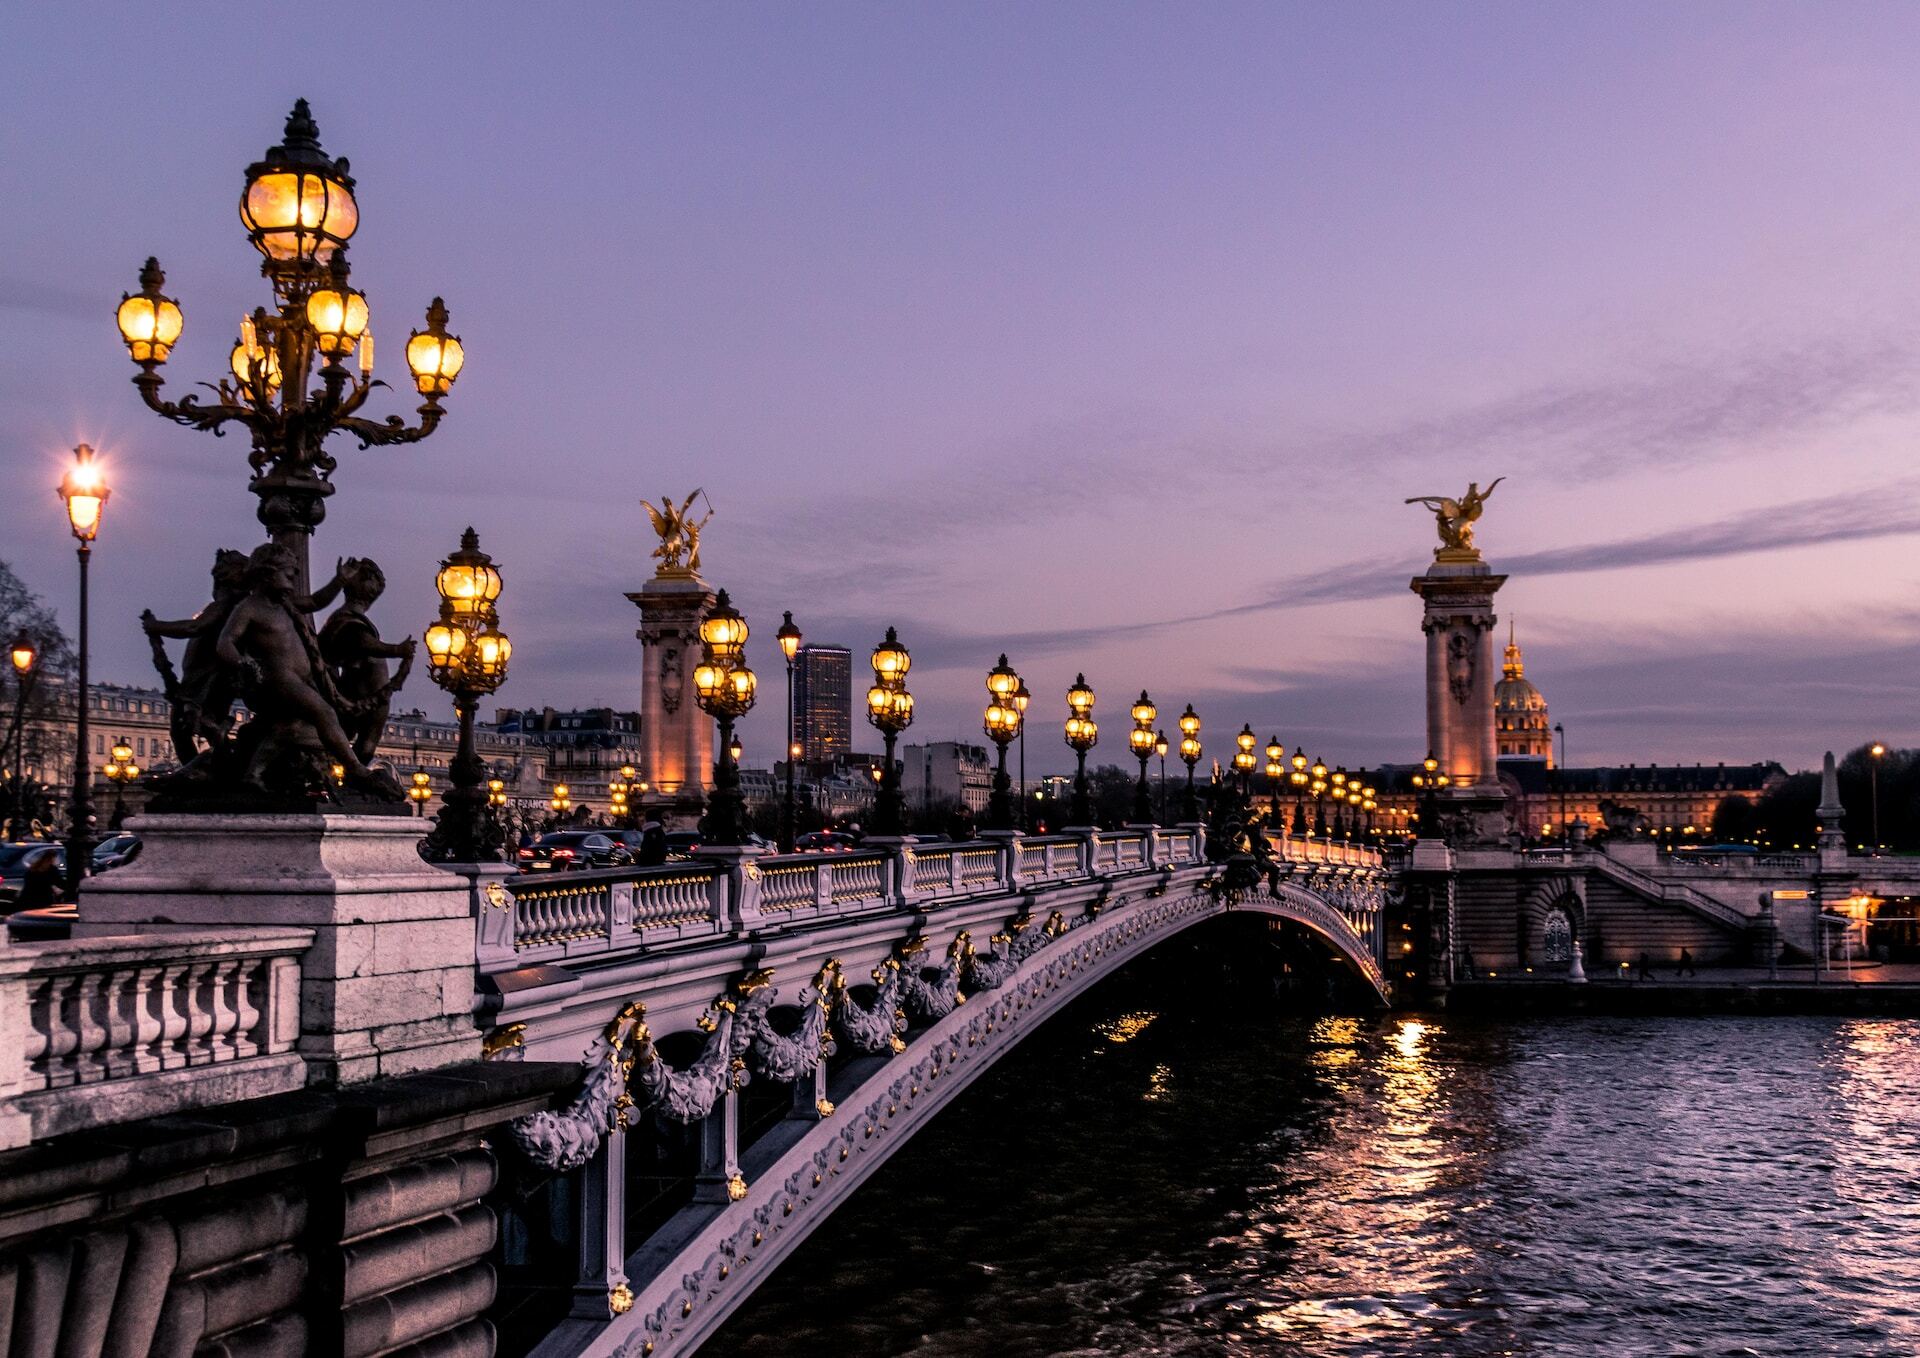 View of the Seine in Paris